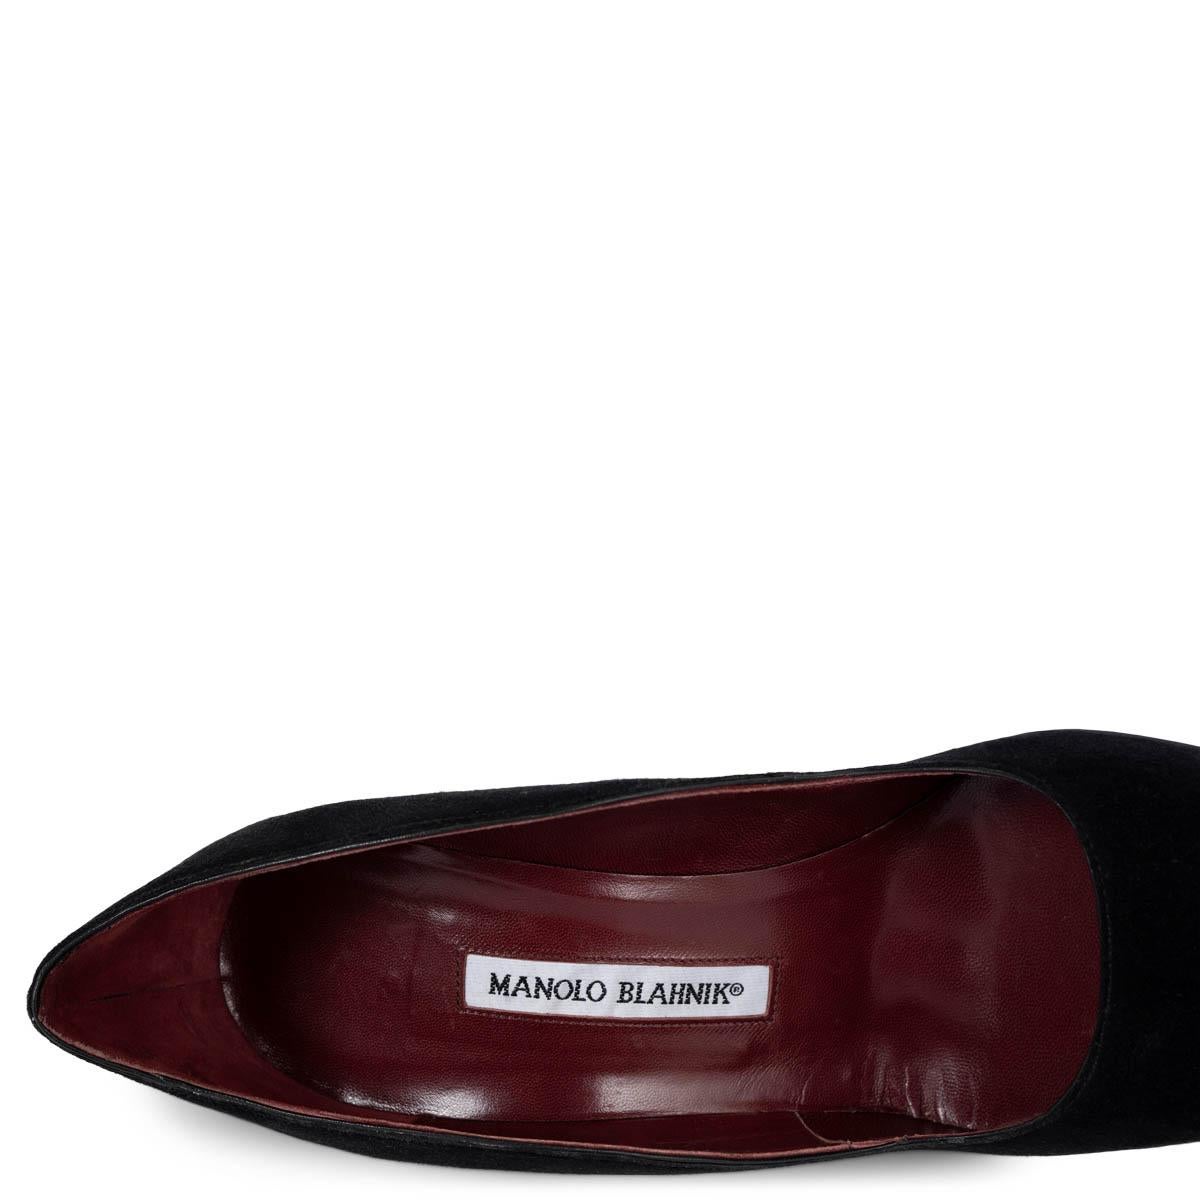 MANOLO BLAHNIK black suede CURVED HEEL Pumps Shoes 38 For Sale 2